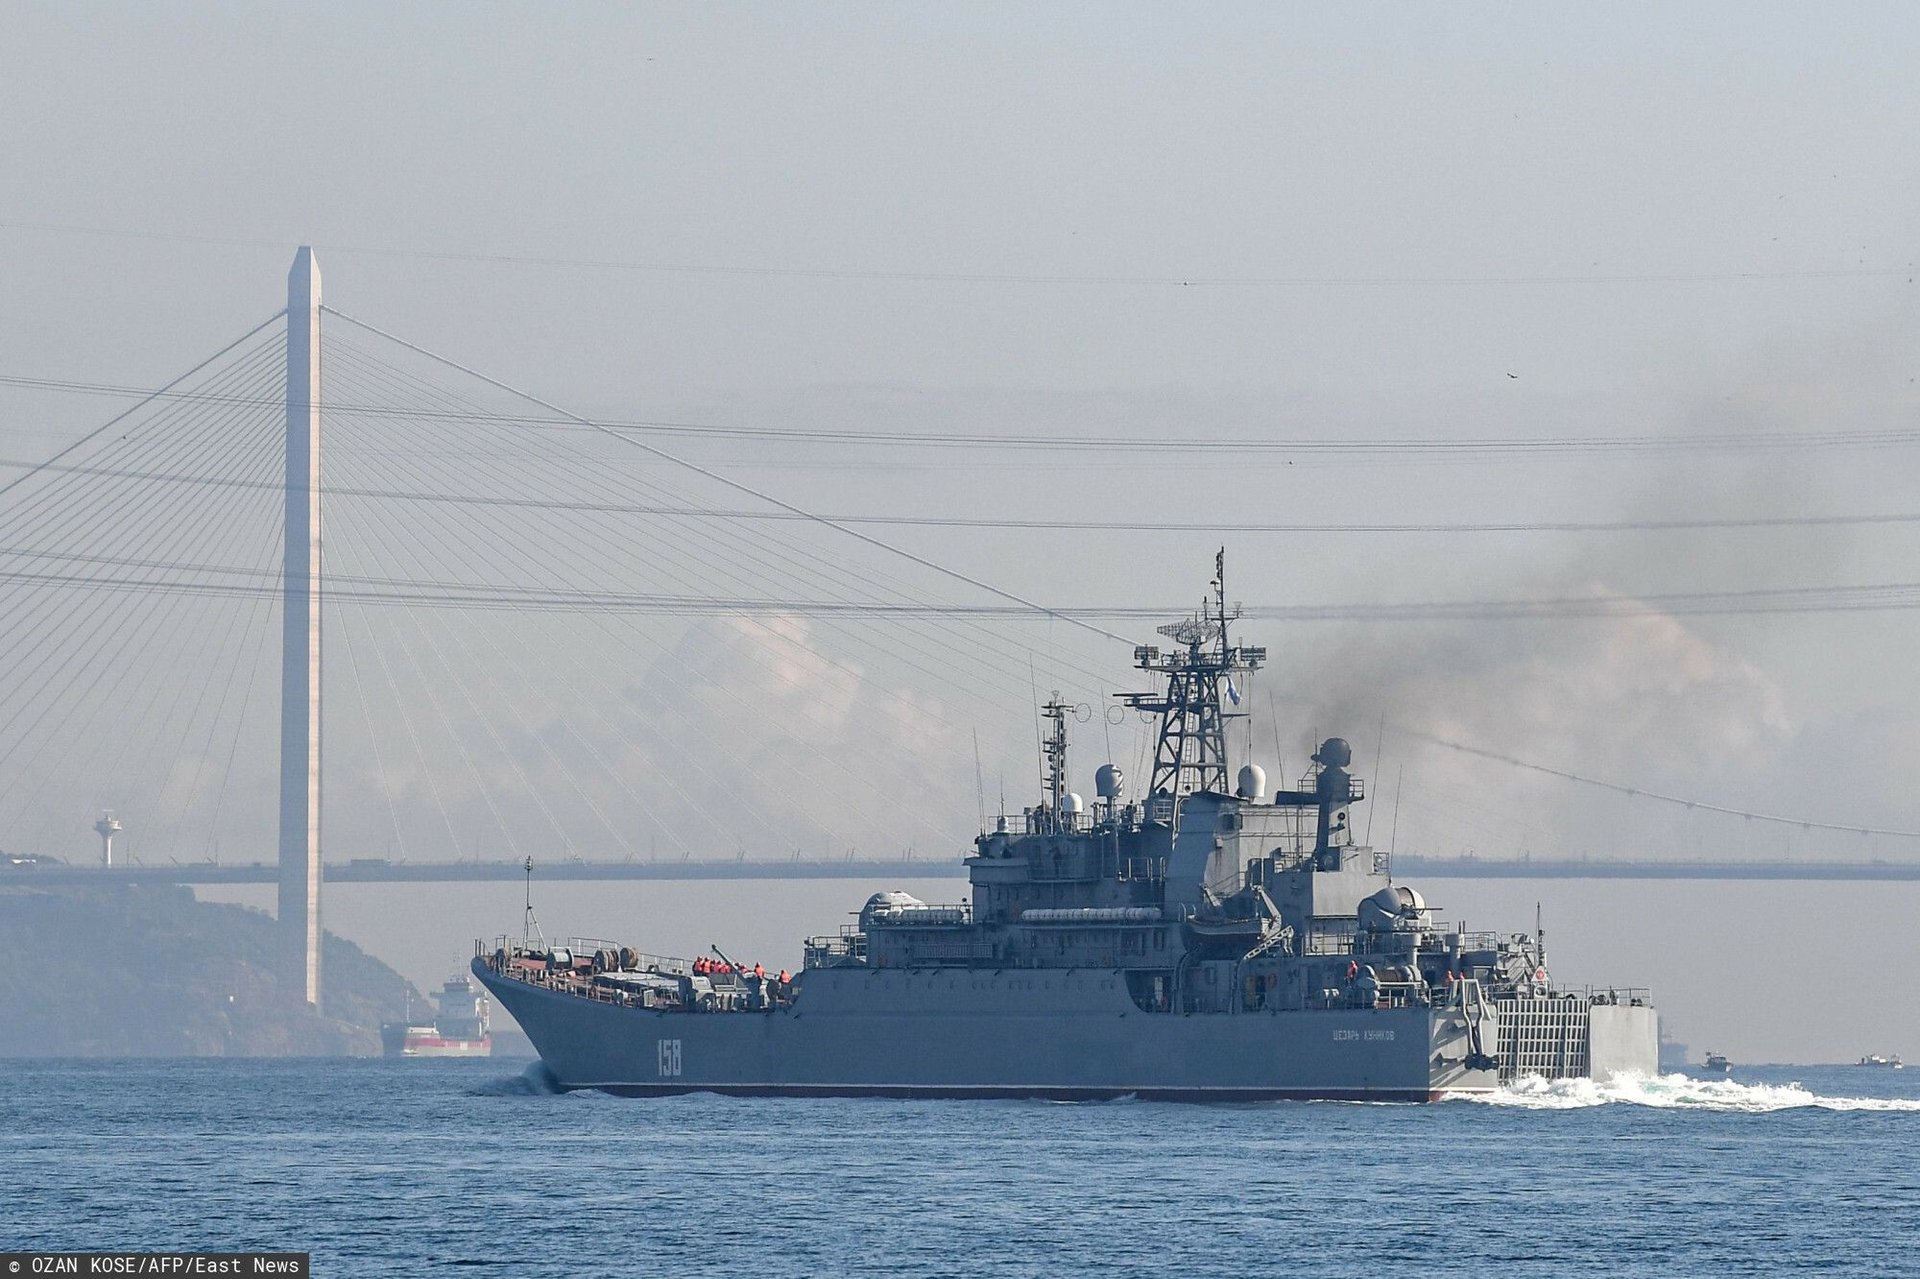 Rosyjski okręt wojenny